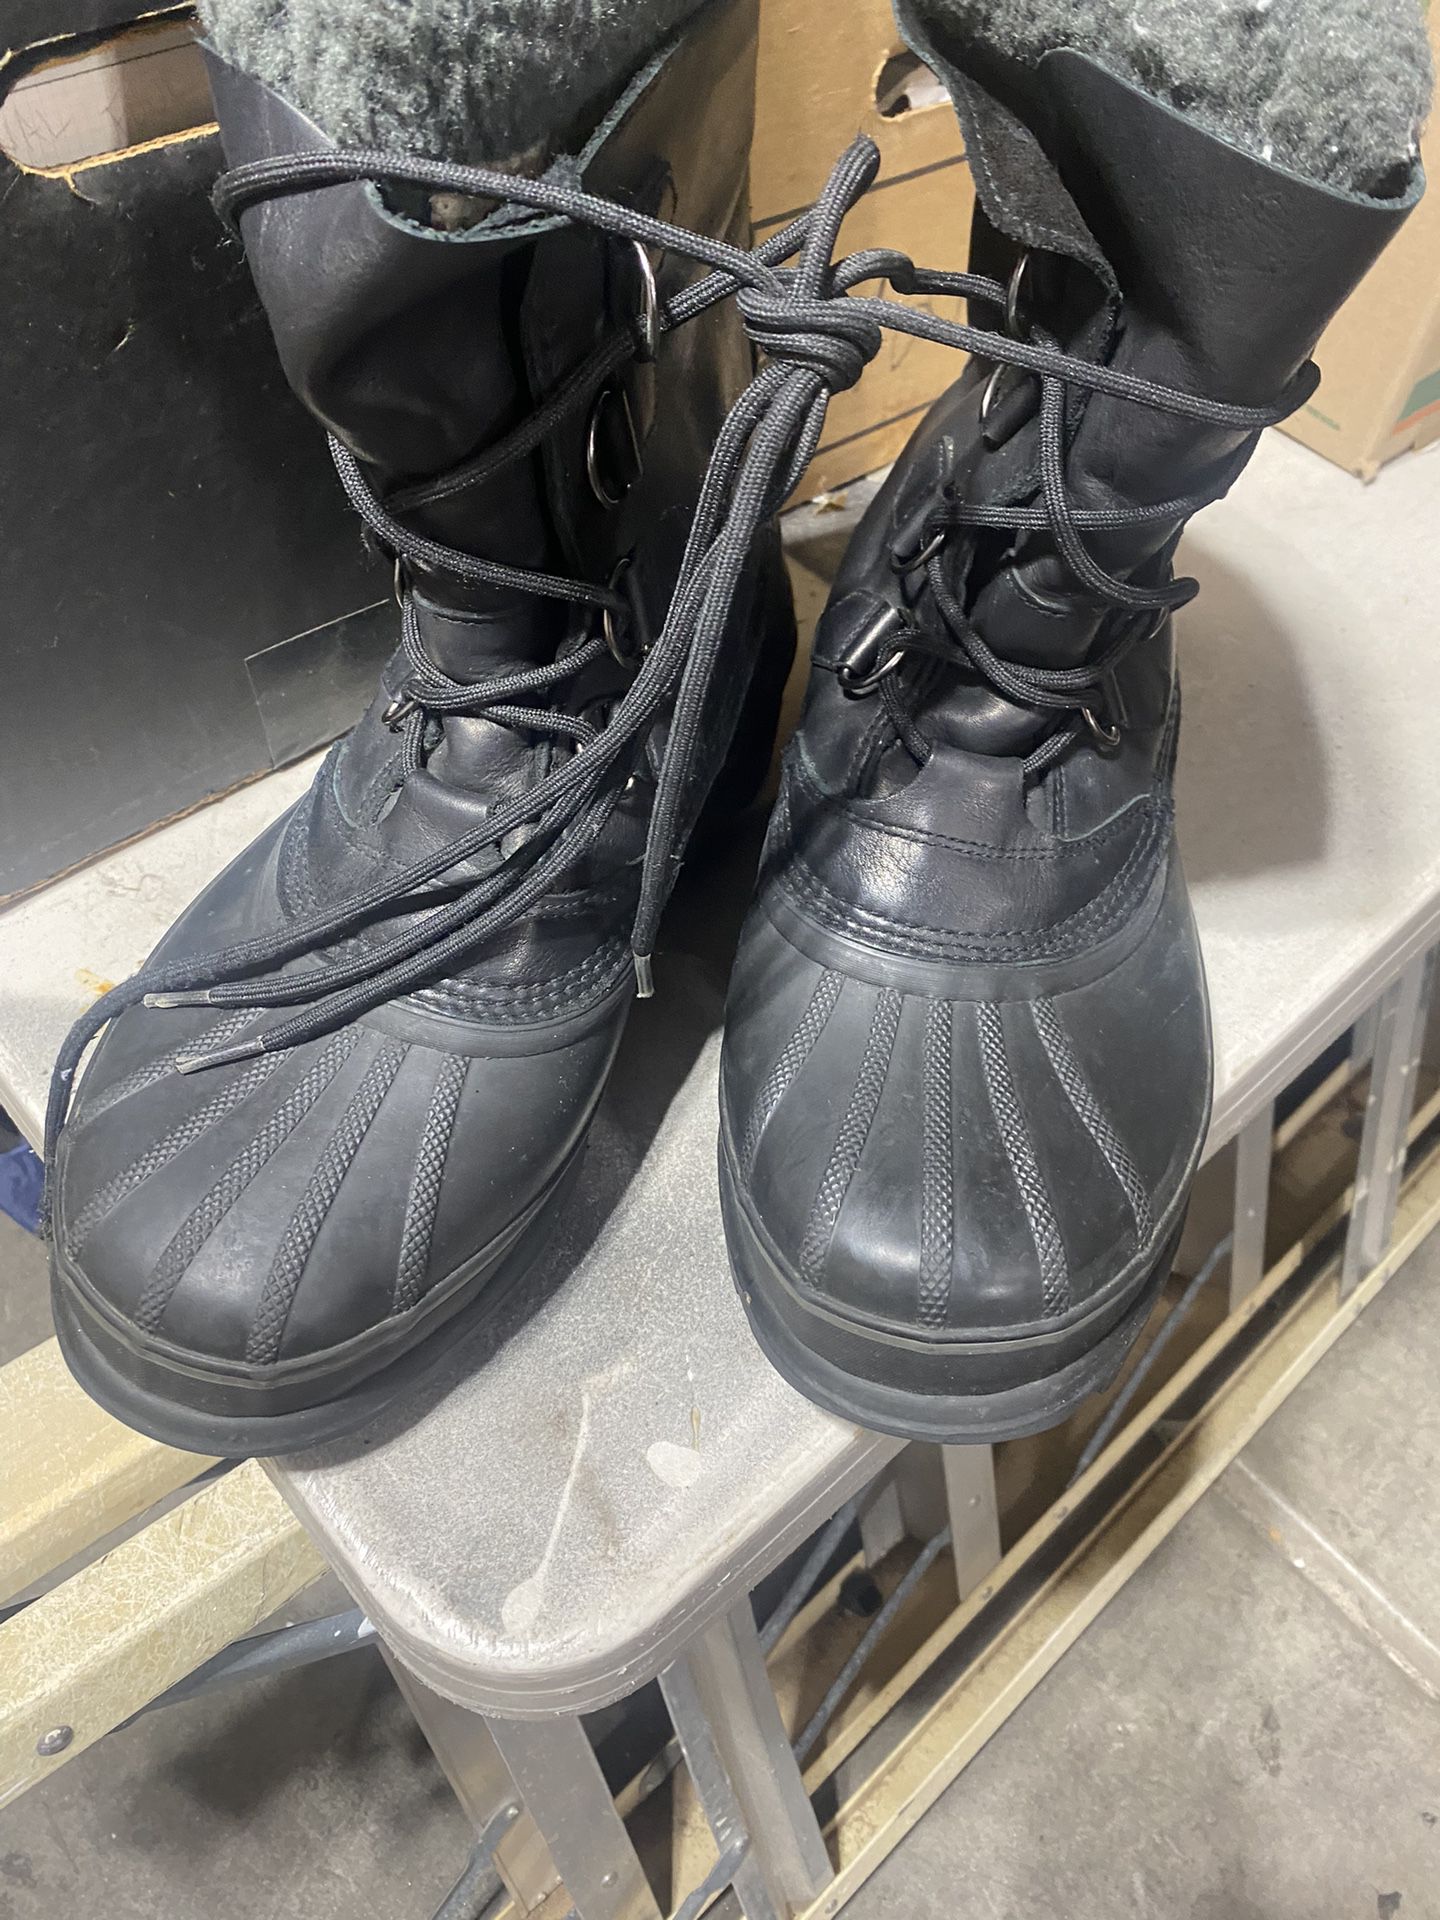 Sorel Caribou Boots Size 10 Like New